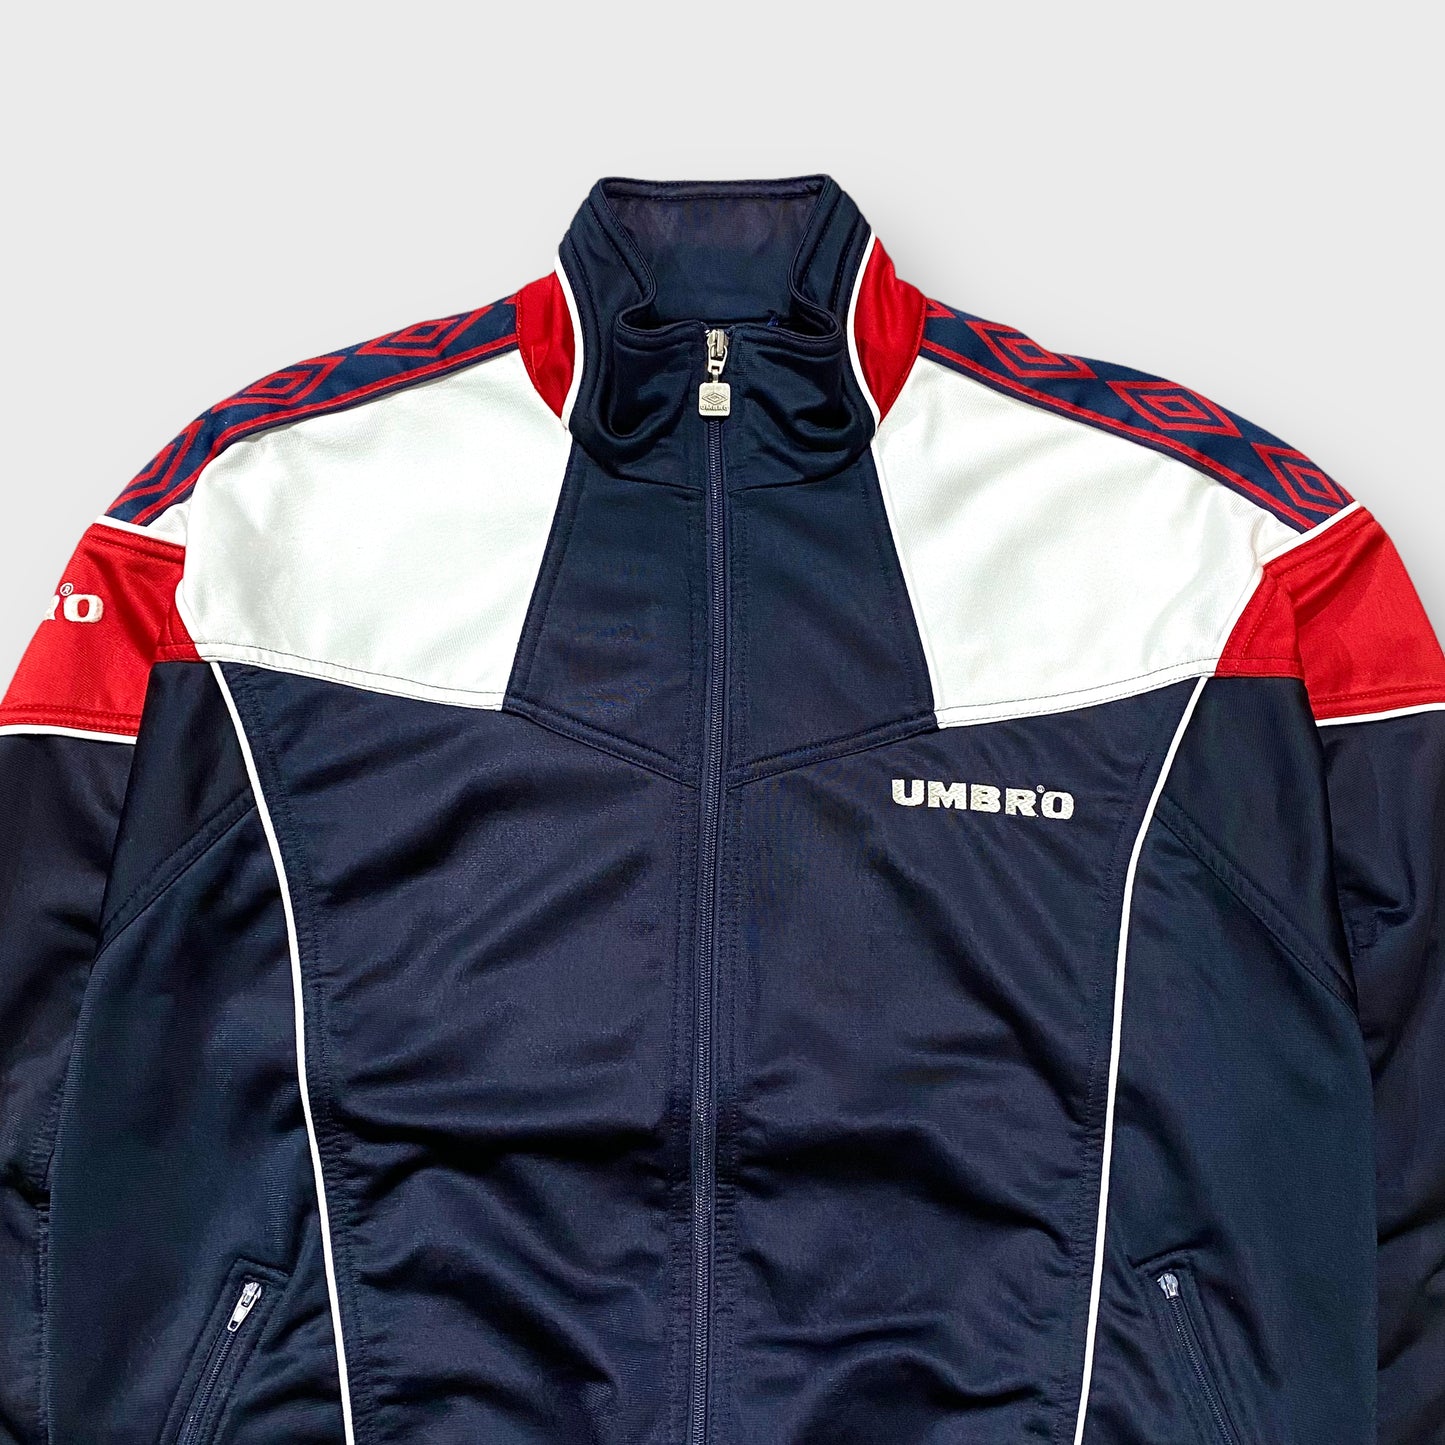 90's "UMBRO" Track jacket